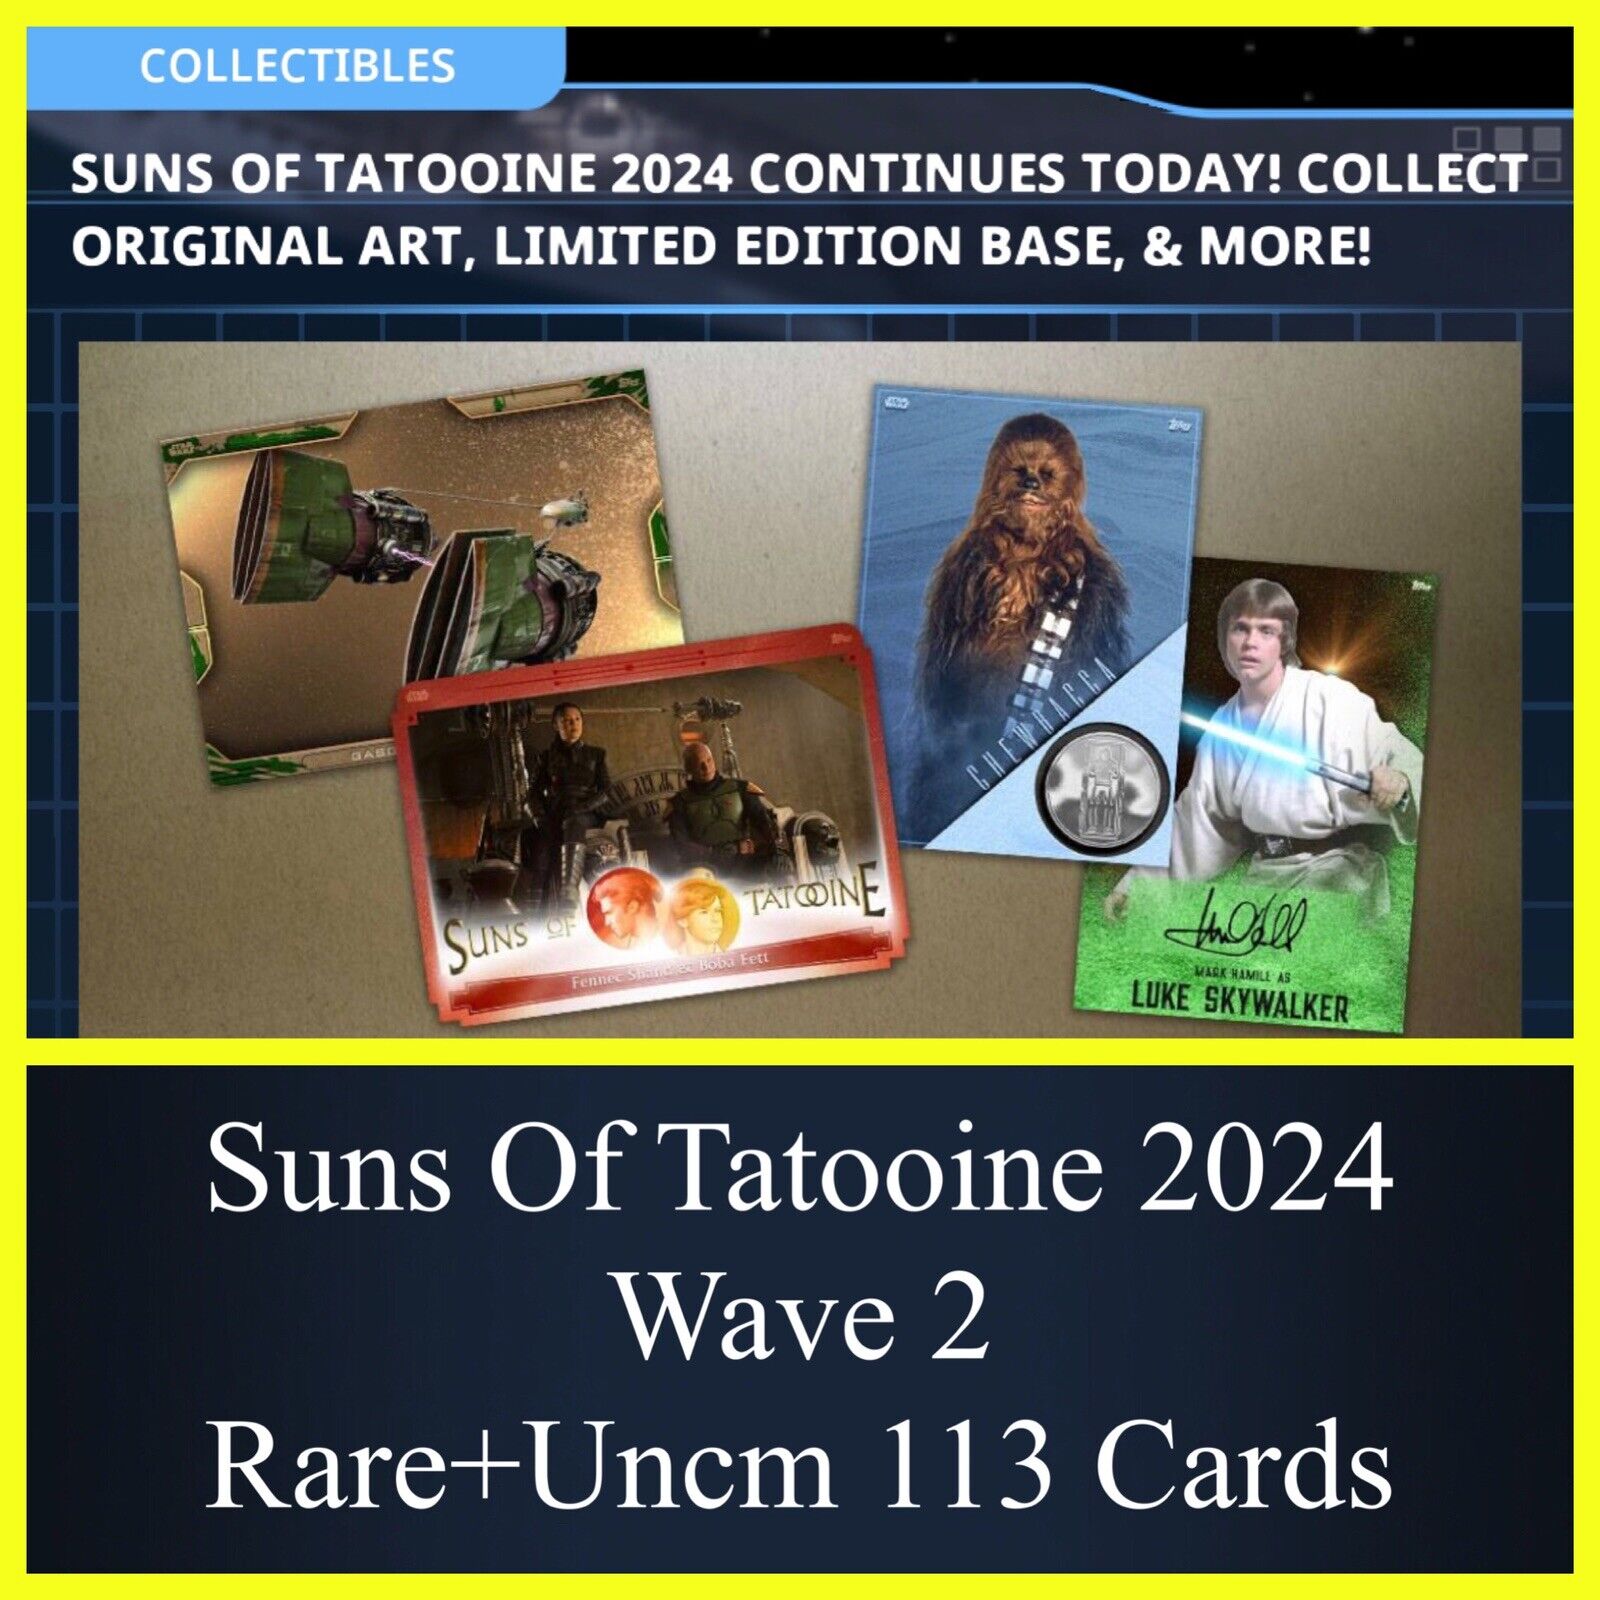 SUNS OF TATOOINE 2024 WAVE 2 RARE+UNCMN 113 CARD SET-TOPPS STAR WARS CARD TRADER